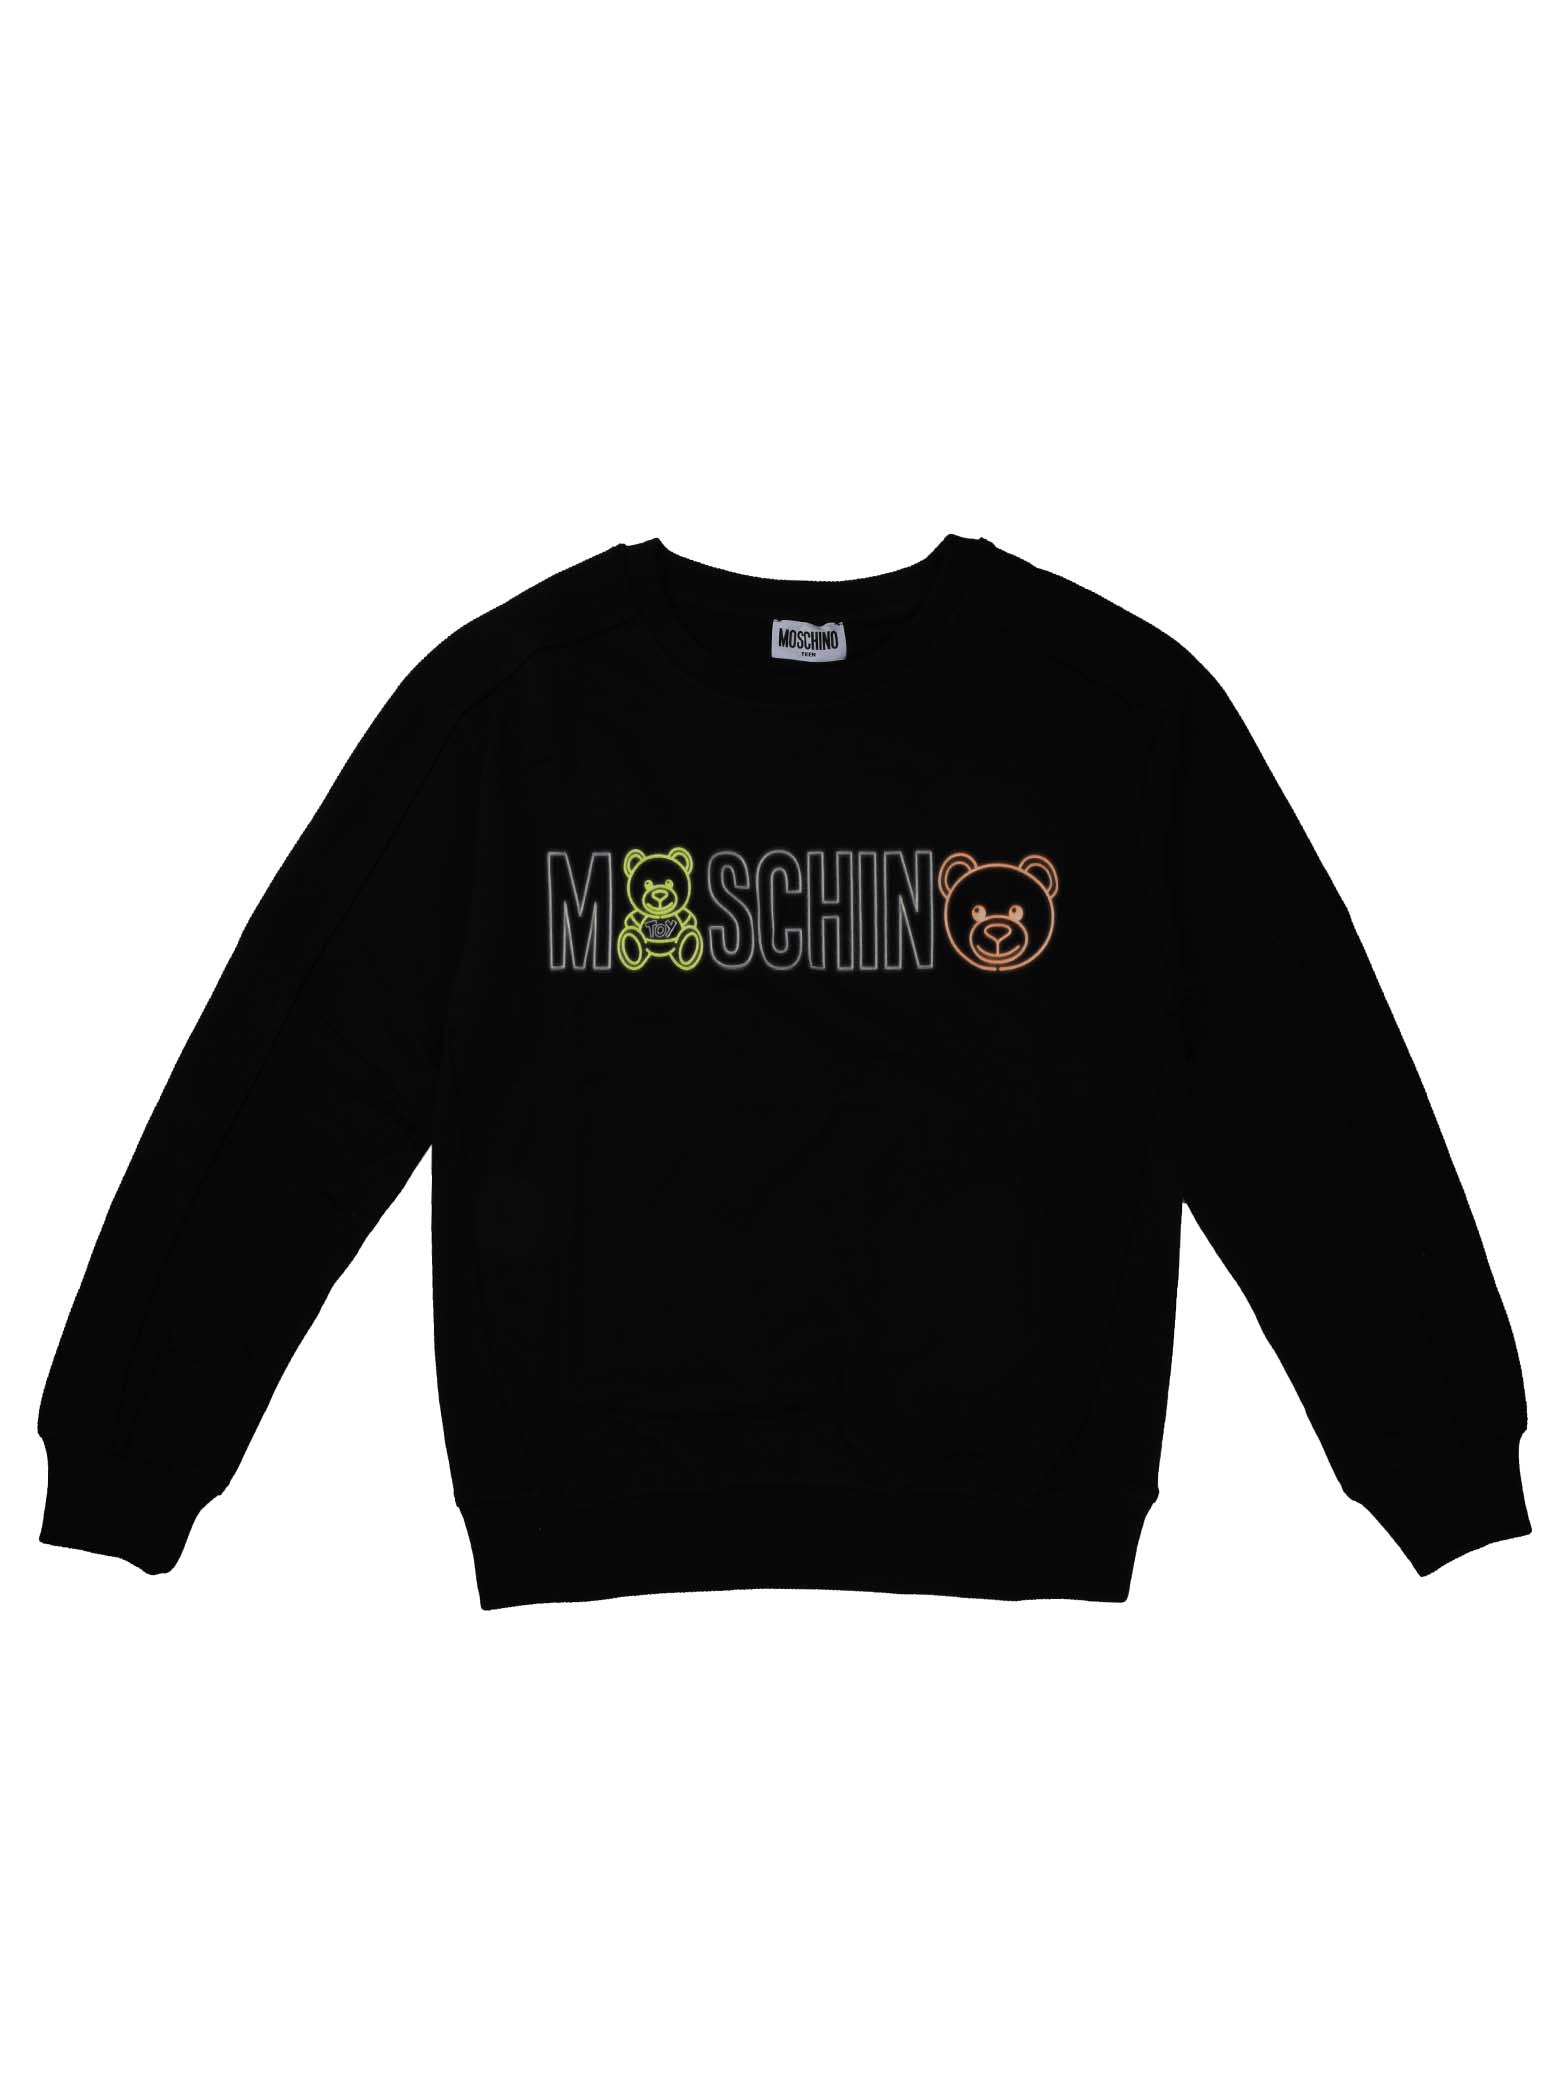 Moschino Black Crew Neck Sweatshirt With Logo Writing